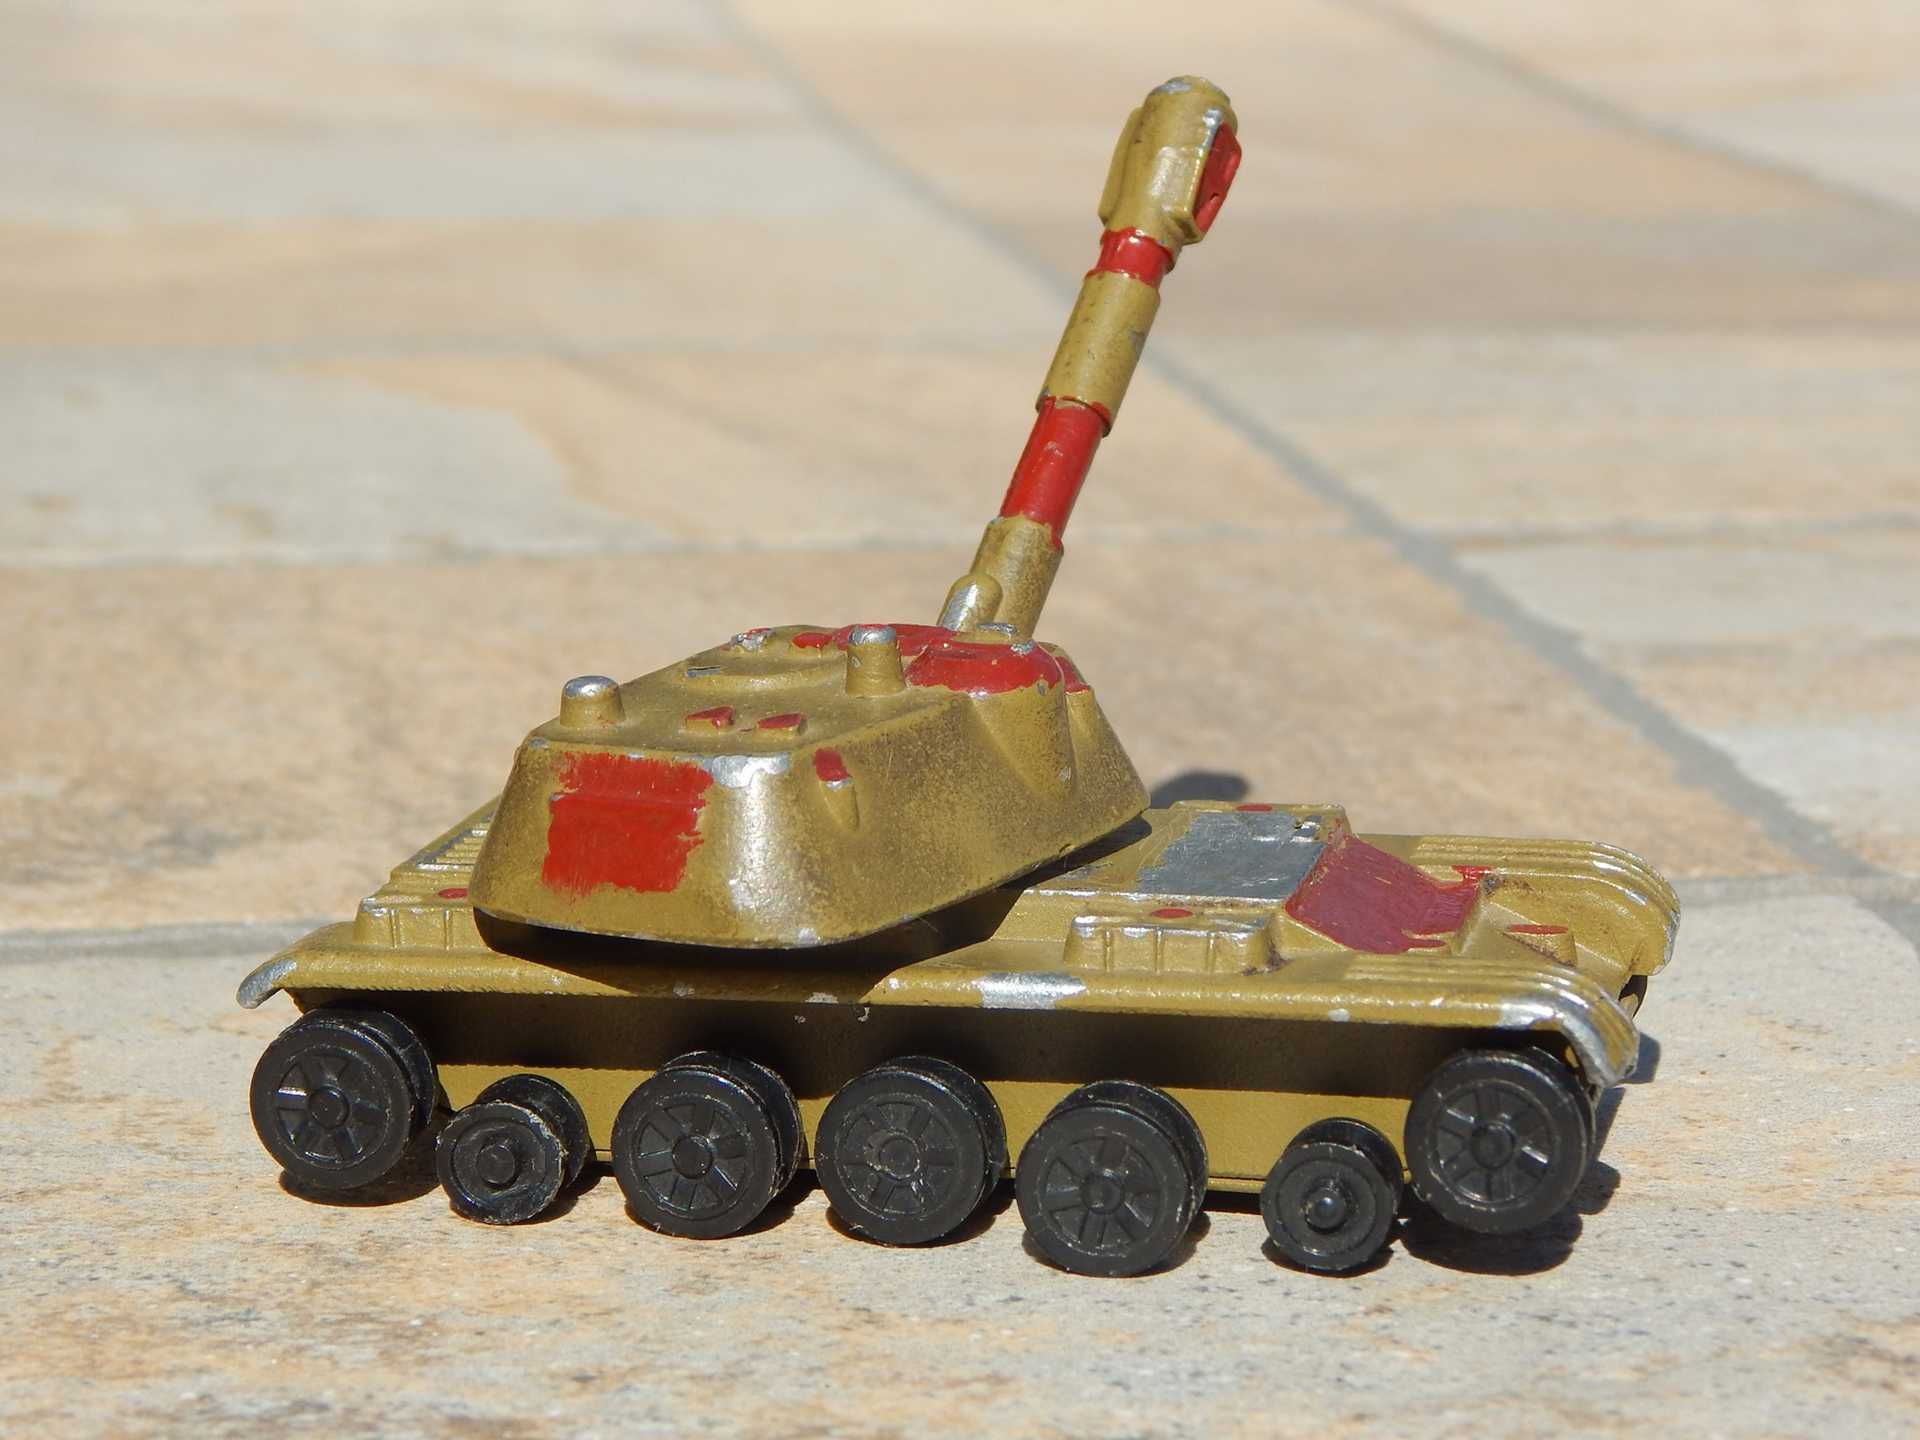 Macheta tanc artilerie obuzier autopropulsat 2S1 Gvozdika URSS 1:72